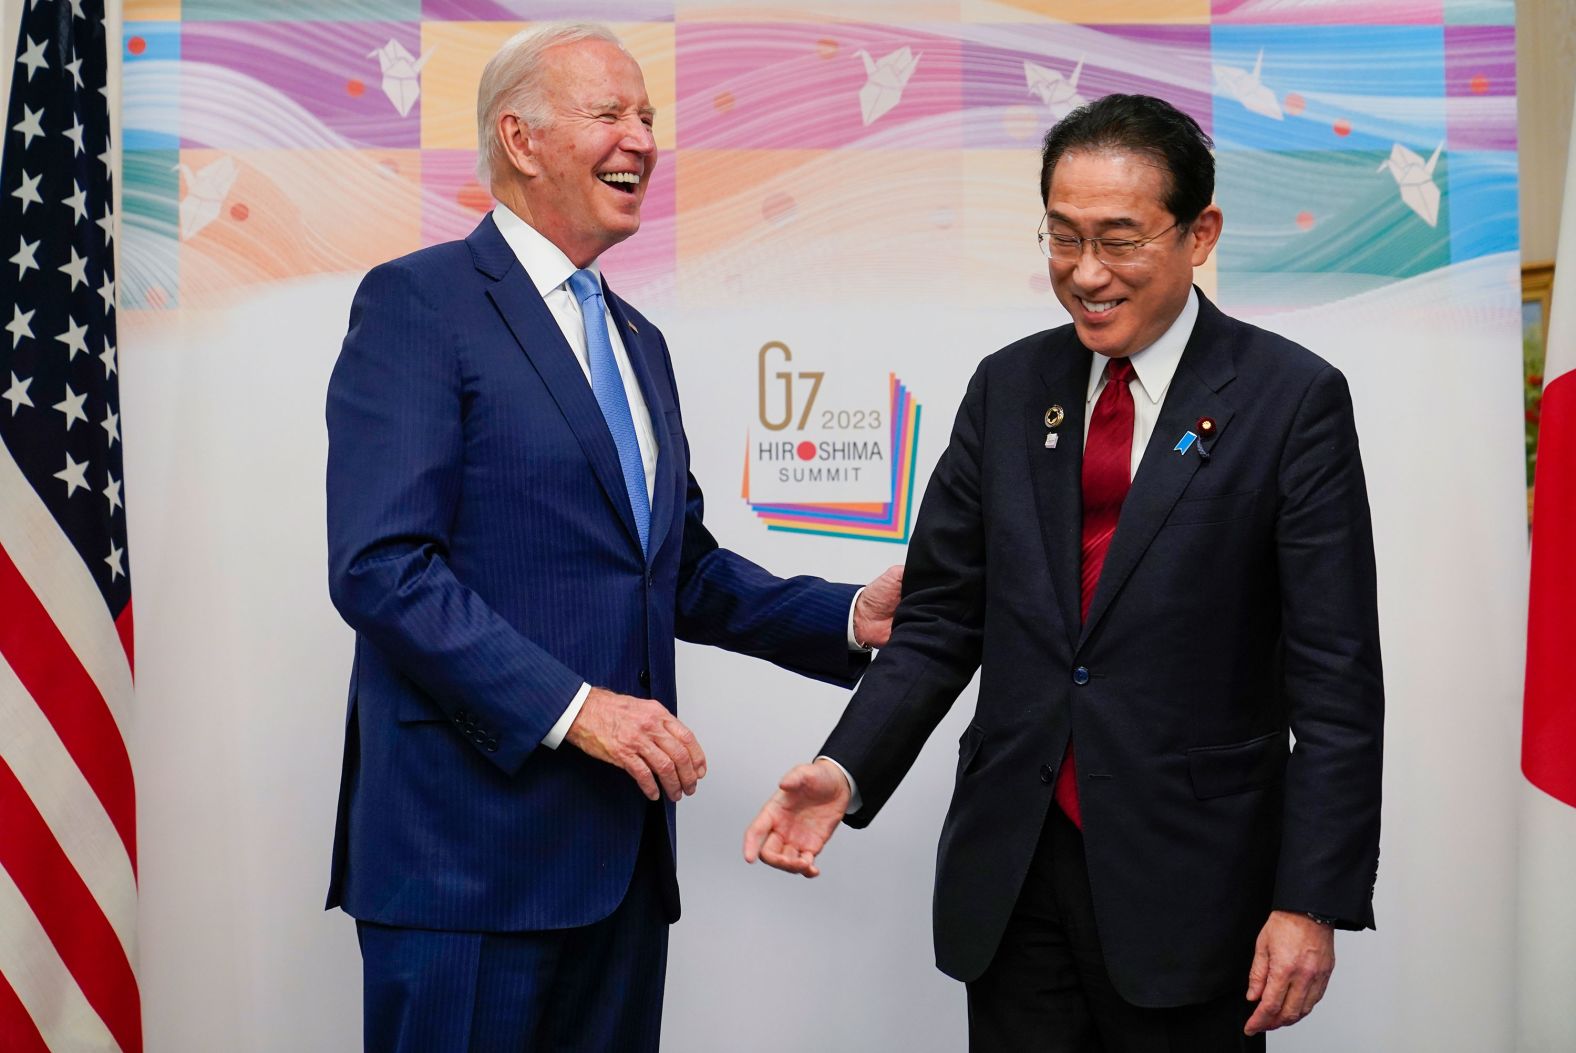 US President Joe Biden, left, <a href="index.php?page=&url=https%3A%2F%2Fwww.cnn.com%2F2023%2F05%2F18%2Fpolitics%2Fbiden-fumio-kishida-meeting-japan%2Findex.html" target="_blank">meets with Japanese Prime Minister Fumio Kishida</a> ahead of the G7 summit in Hiroshima, Japan, on Thursday, May 18. <a href="index.php?page=&url=http%3A%2F%2Fwww.cnn.com%2F2023%2F05%2F18%2Fpolitics%2Fgallery%2Fpresident-joe-biden-japan%2Findex.html" target="_blank">See more photos of Biden's trip to Japan</a>.